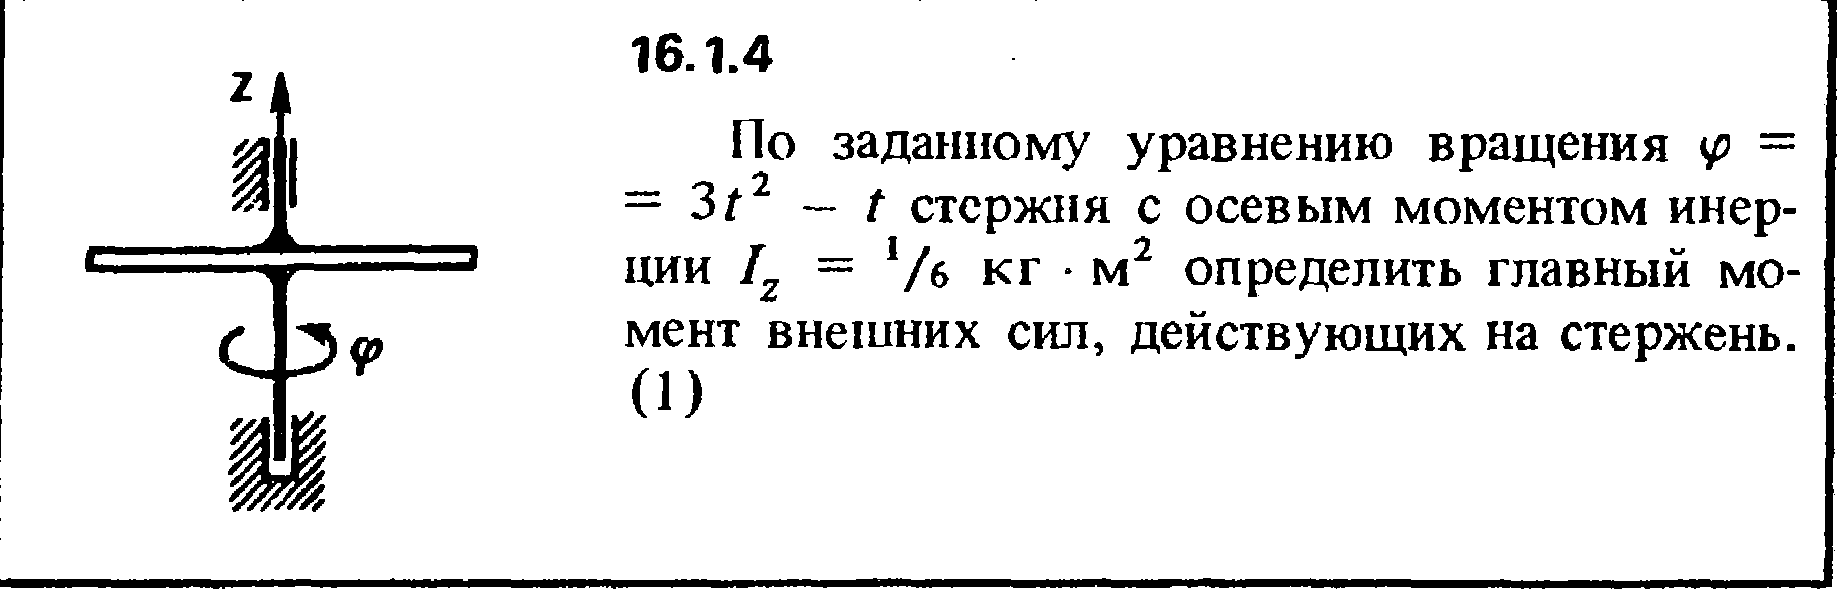 Решение задачи 16.1.4 из сборника Кепе О.Е. 1989 года